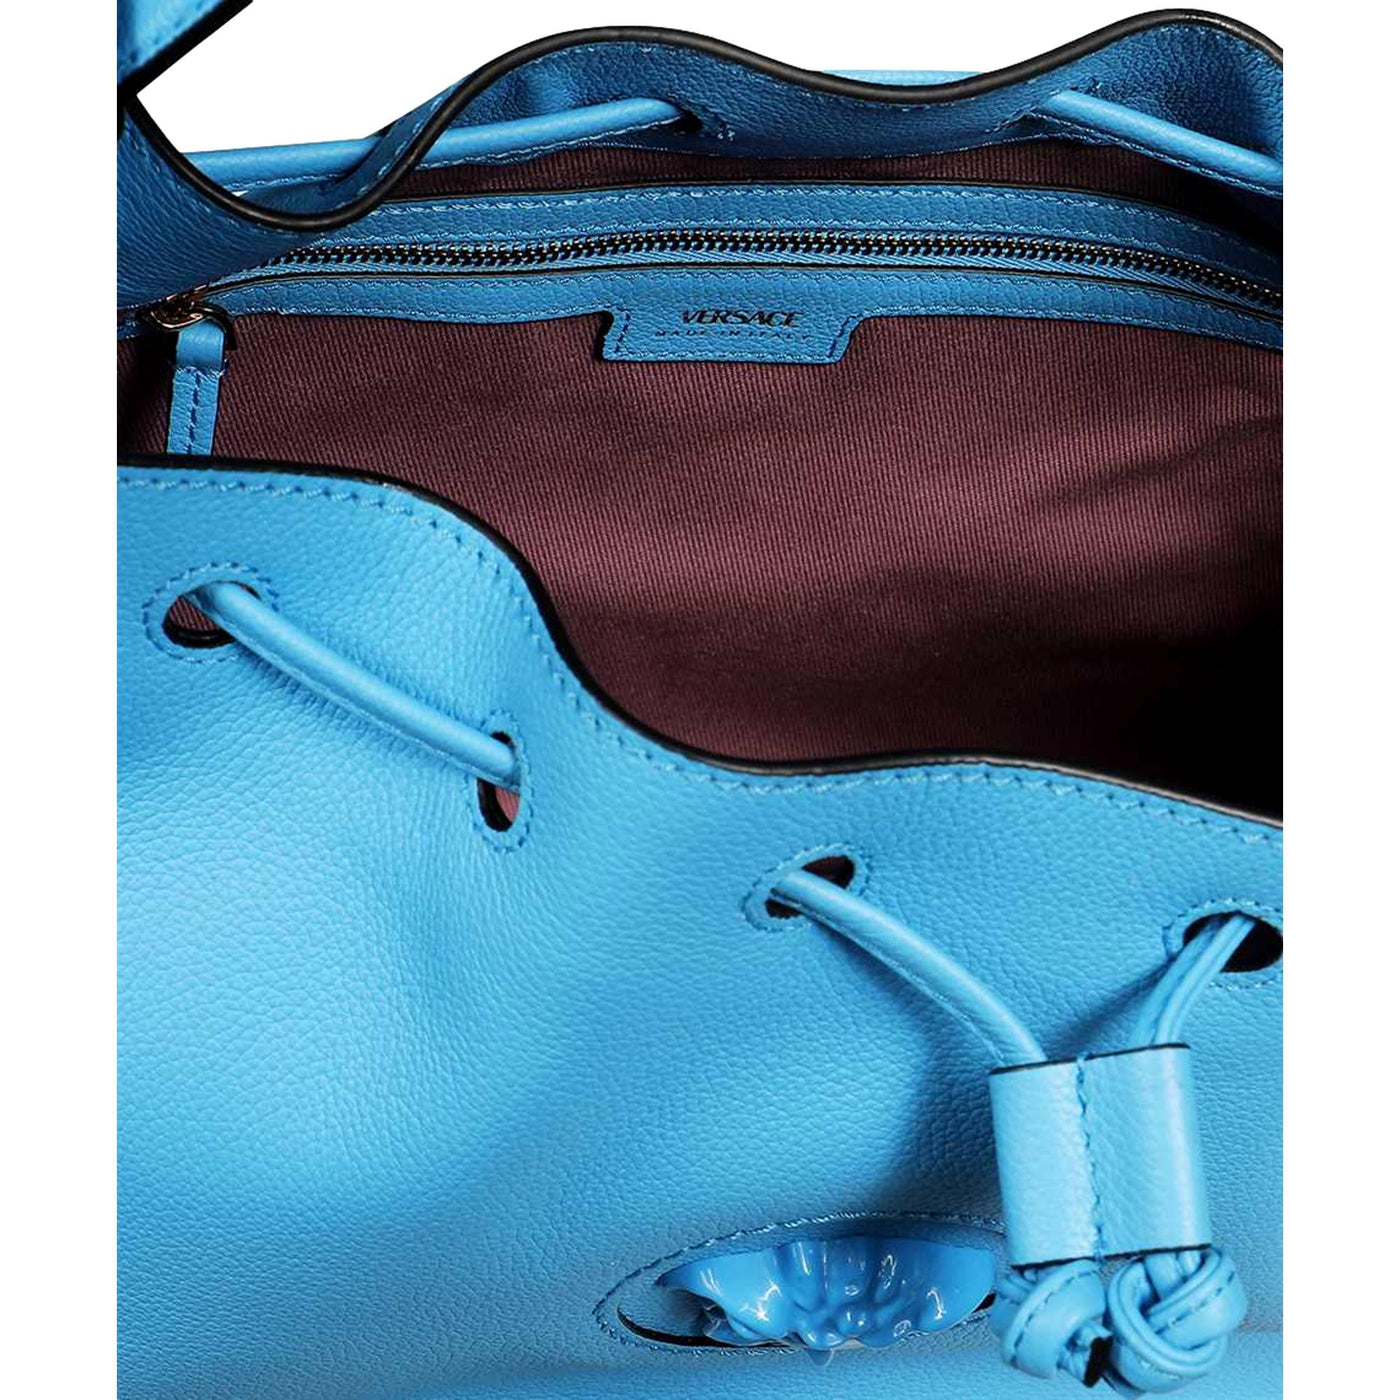 Versace La Medusa Leather Bucket Bag Blue - LUXURYMRKT